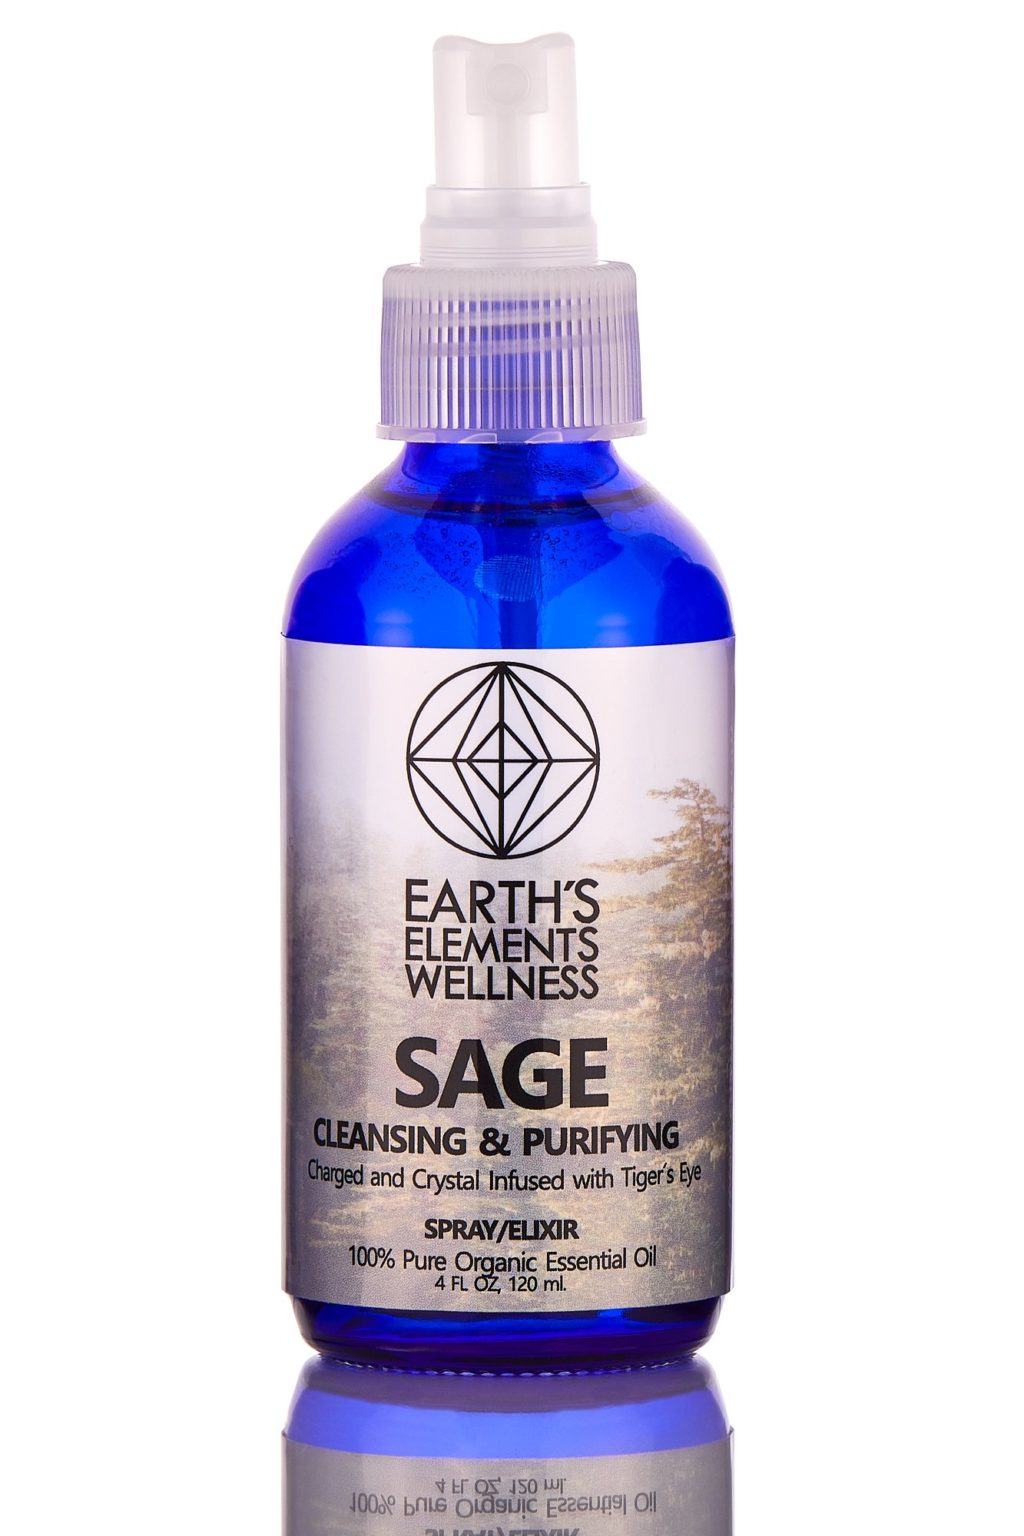 download the last version for iphoneSawed-Off Sage Spray cs go skin